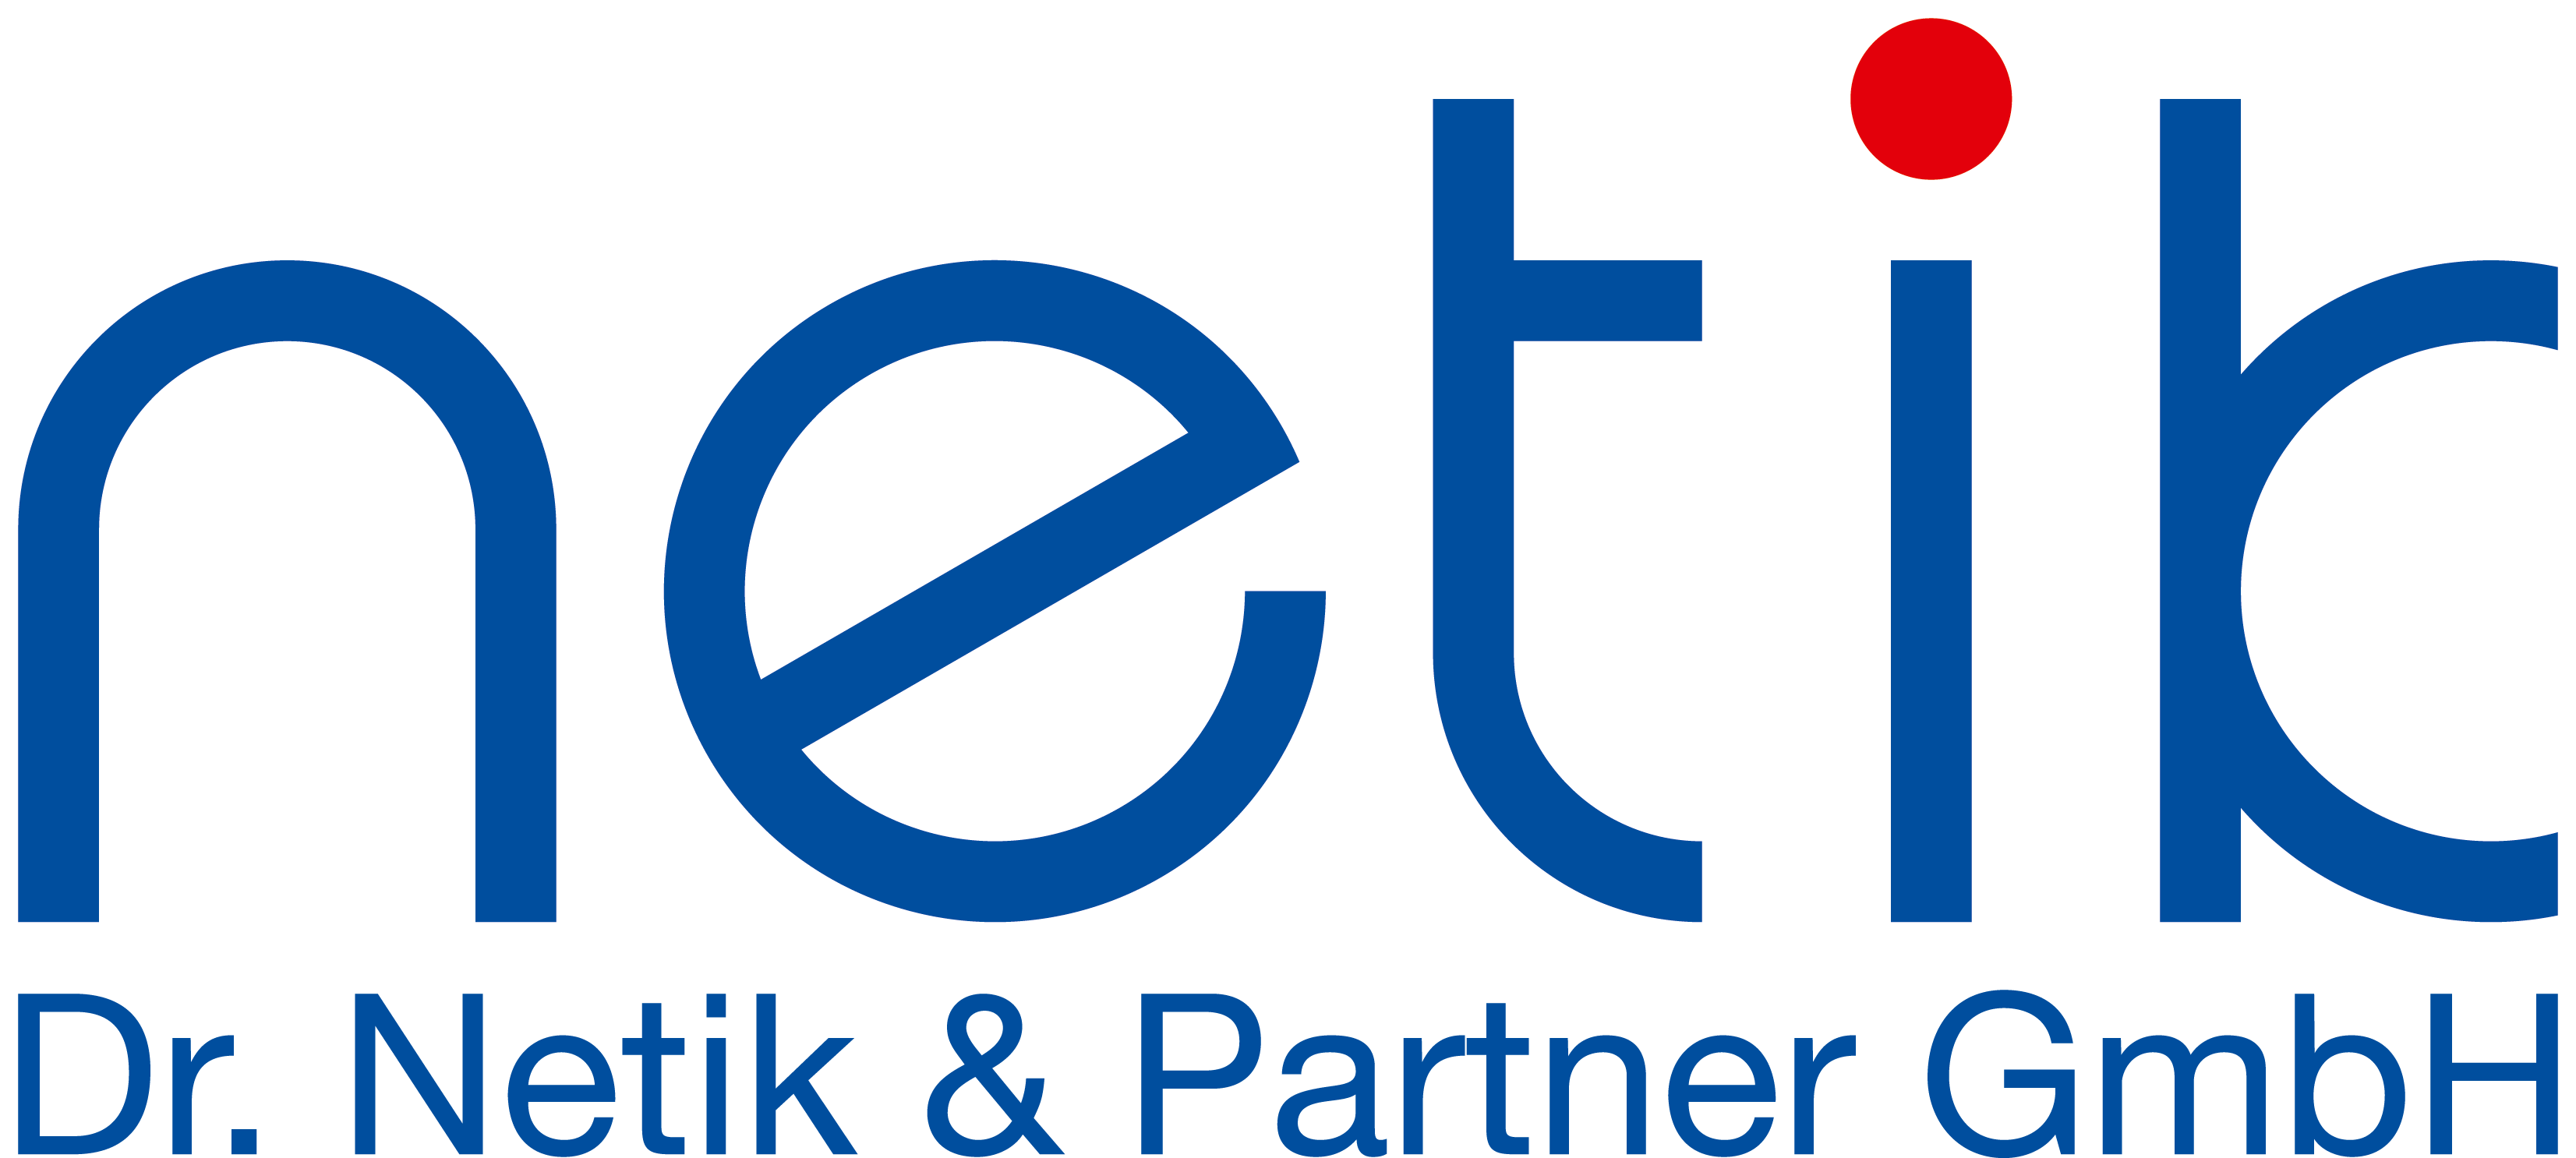 Dr. Netik & Partner GmbH